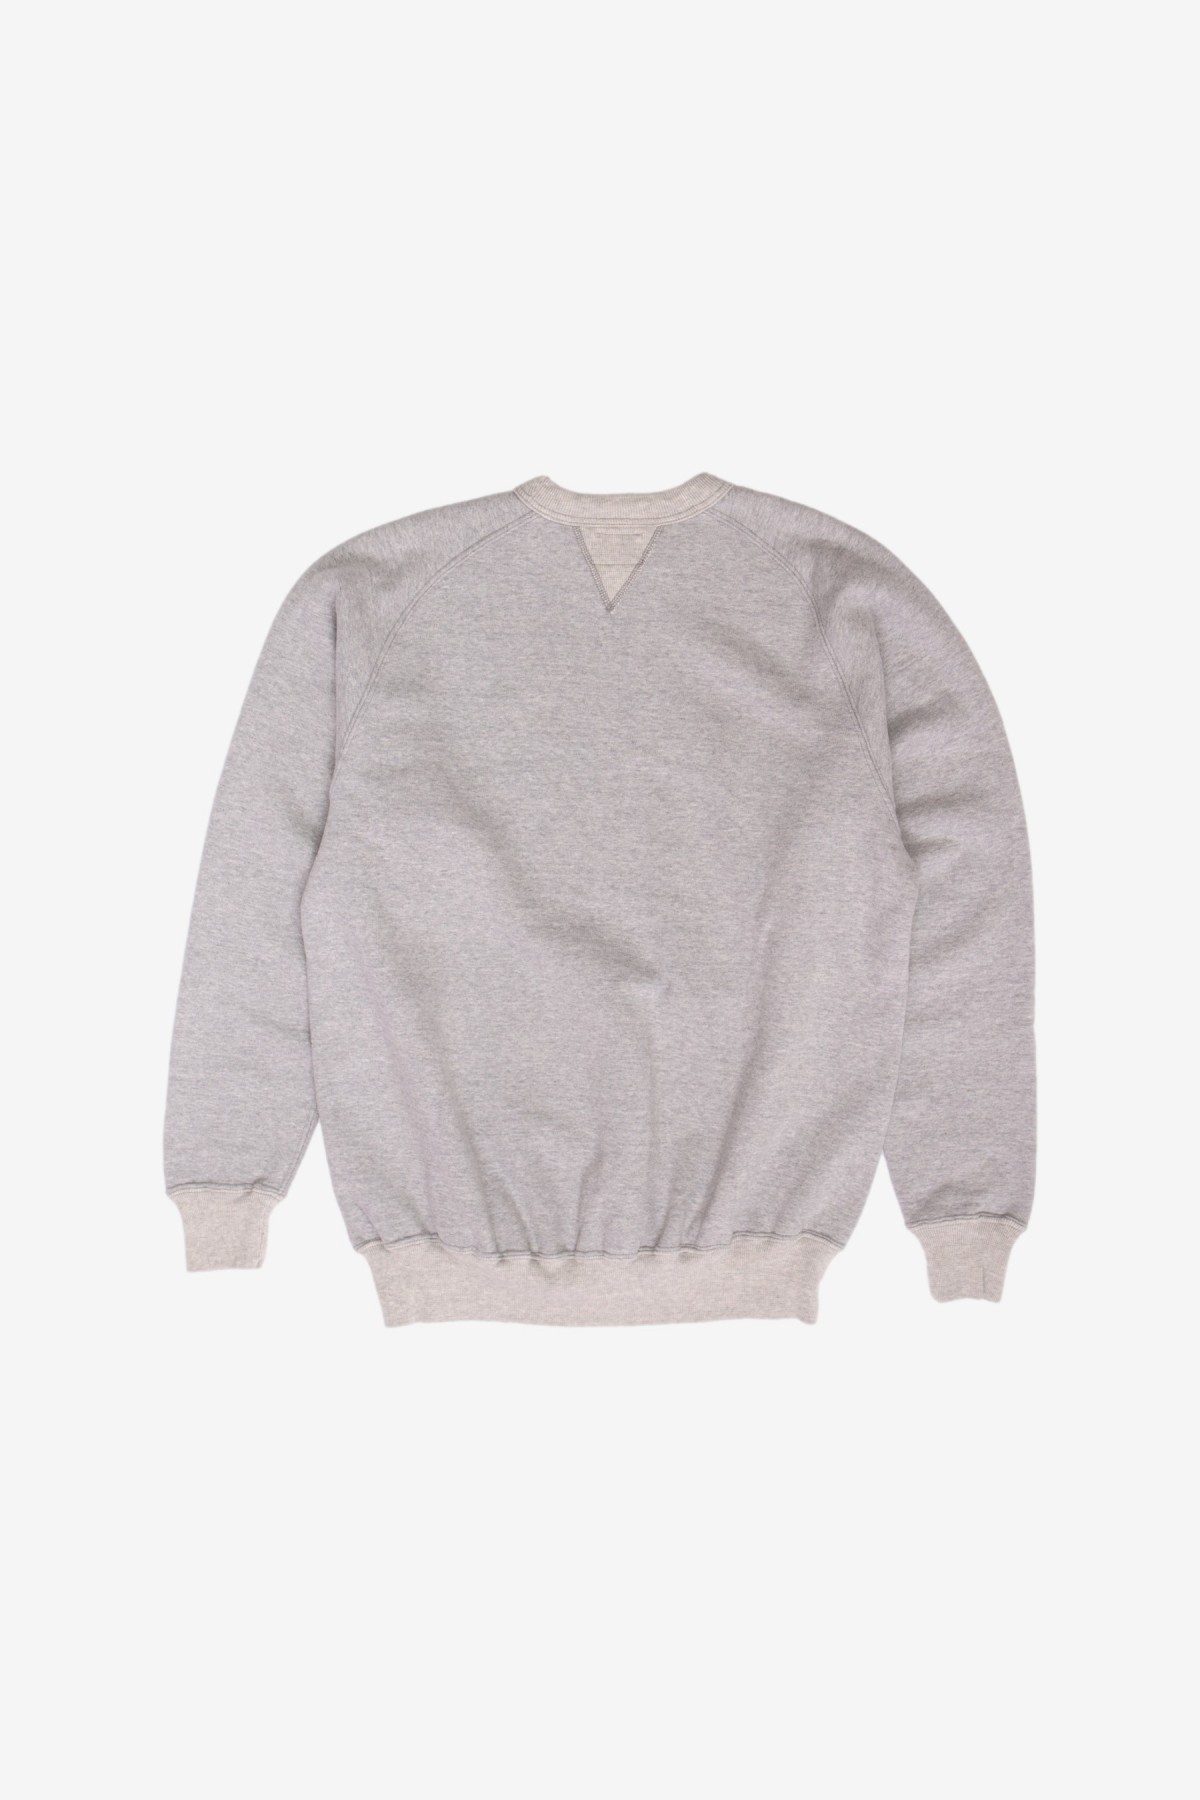 Sunray Sportswear Puamana Crewneck Sweater in Hambledon Grey